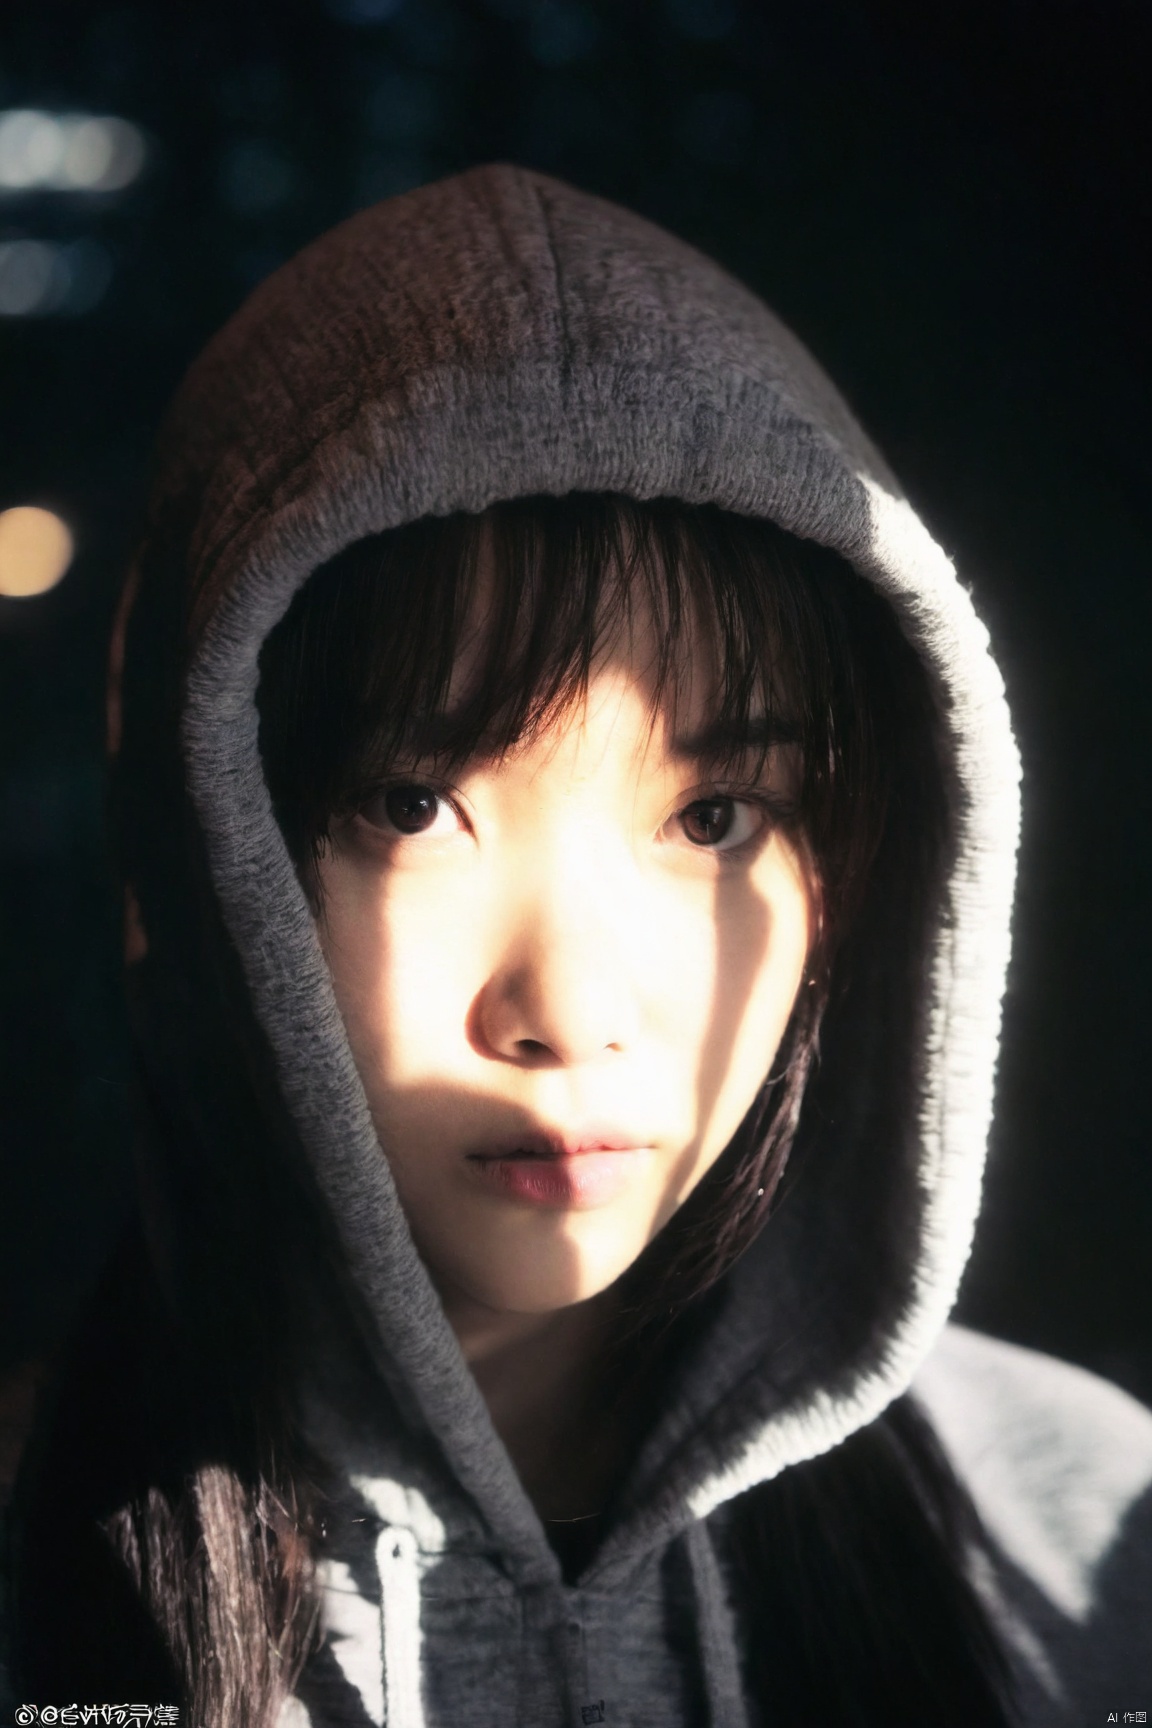  a girl close up,chinese girl,tyndall effect,Hoodie,foggy,dark shadow photography,surreal dramatic lighting shadow (lofi, analog)
, xxmixgirl, sunlight